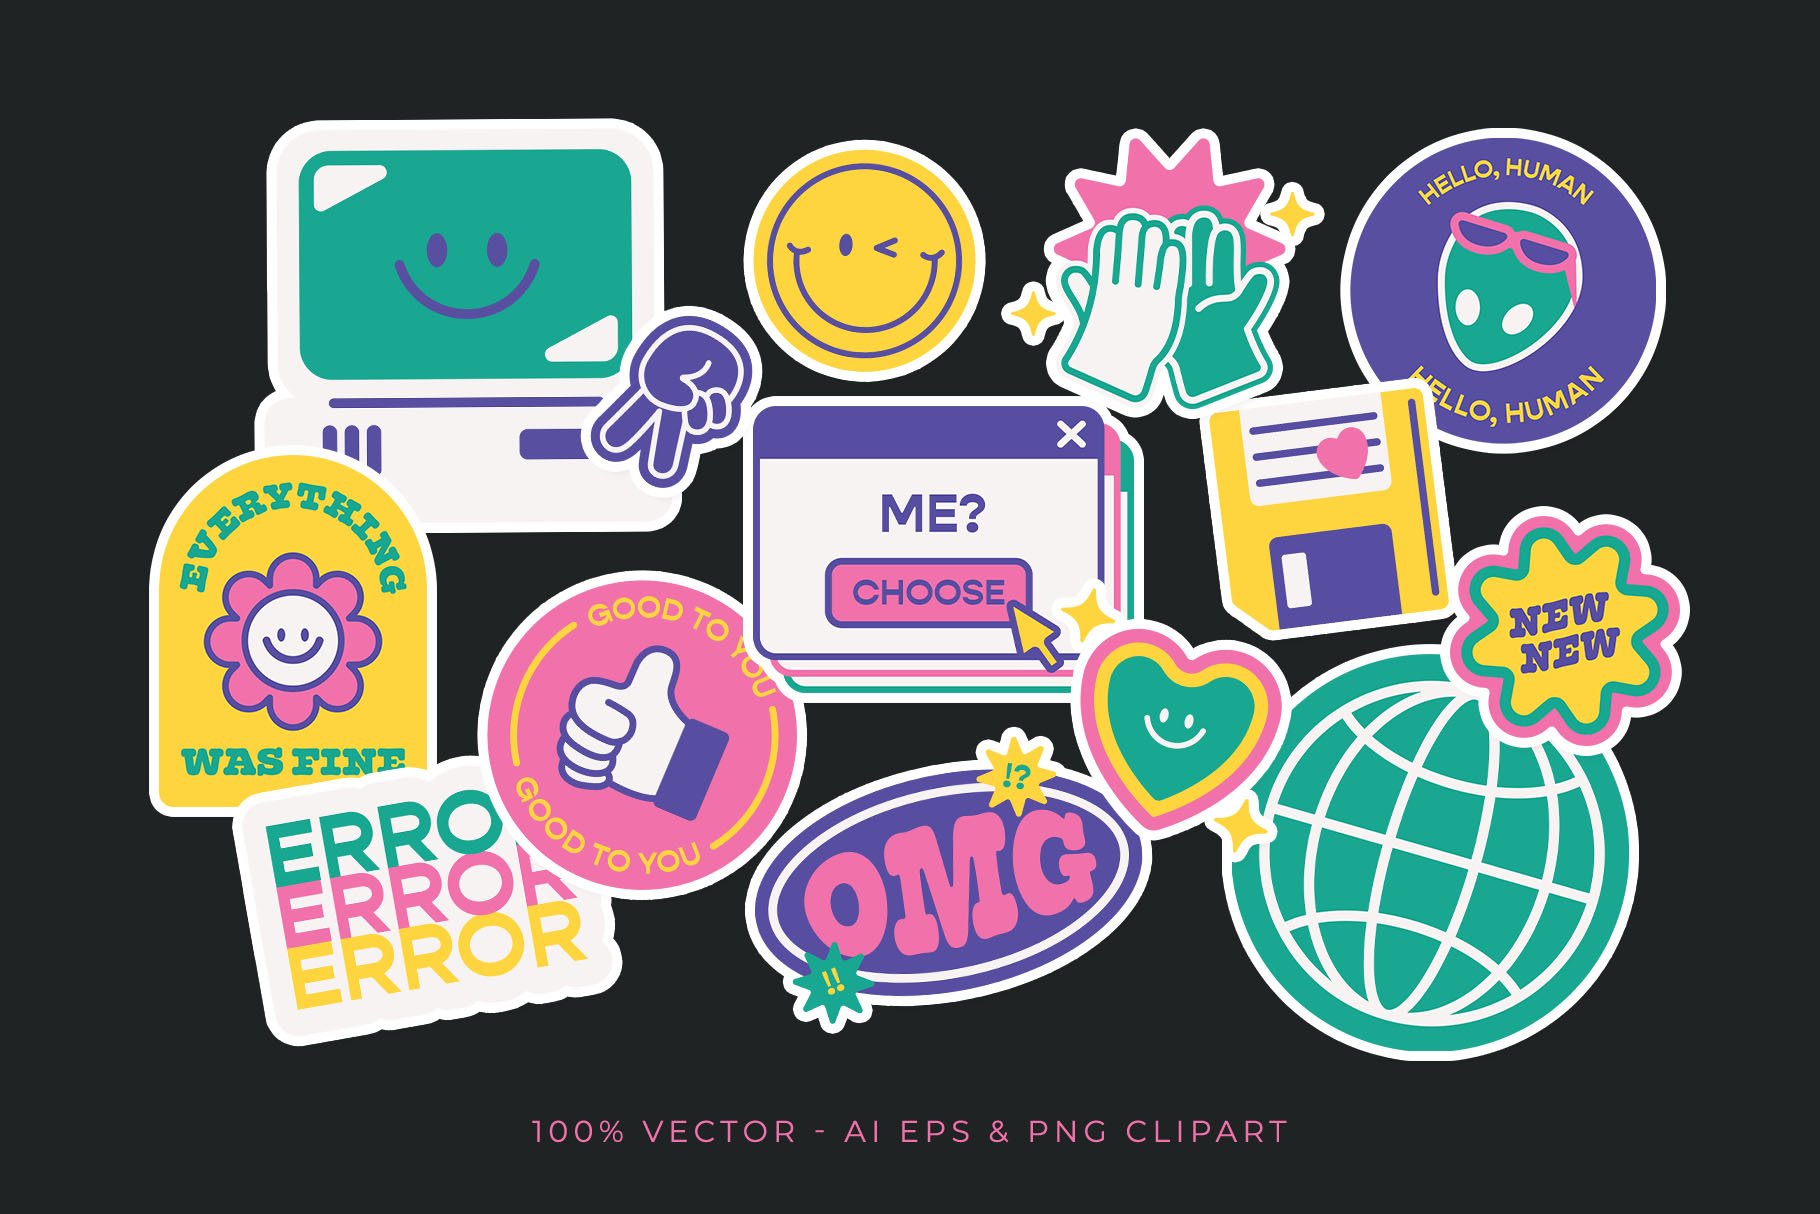 Y2K Sticker Illustrations - Design Cuts